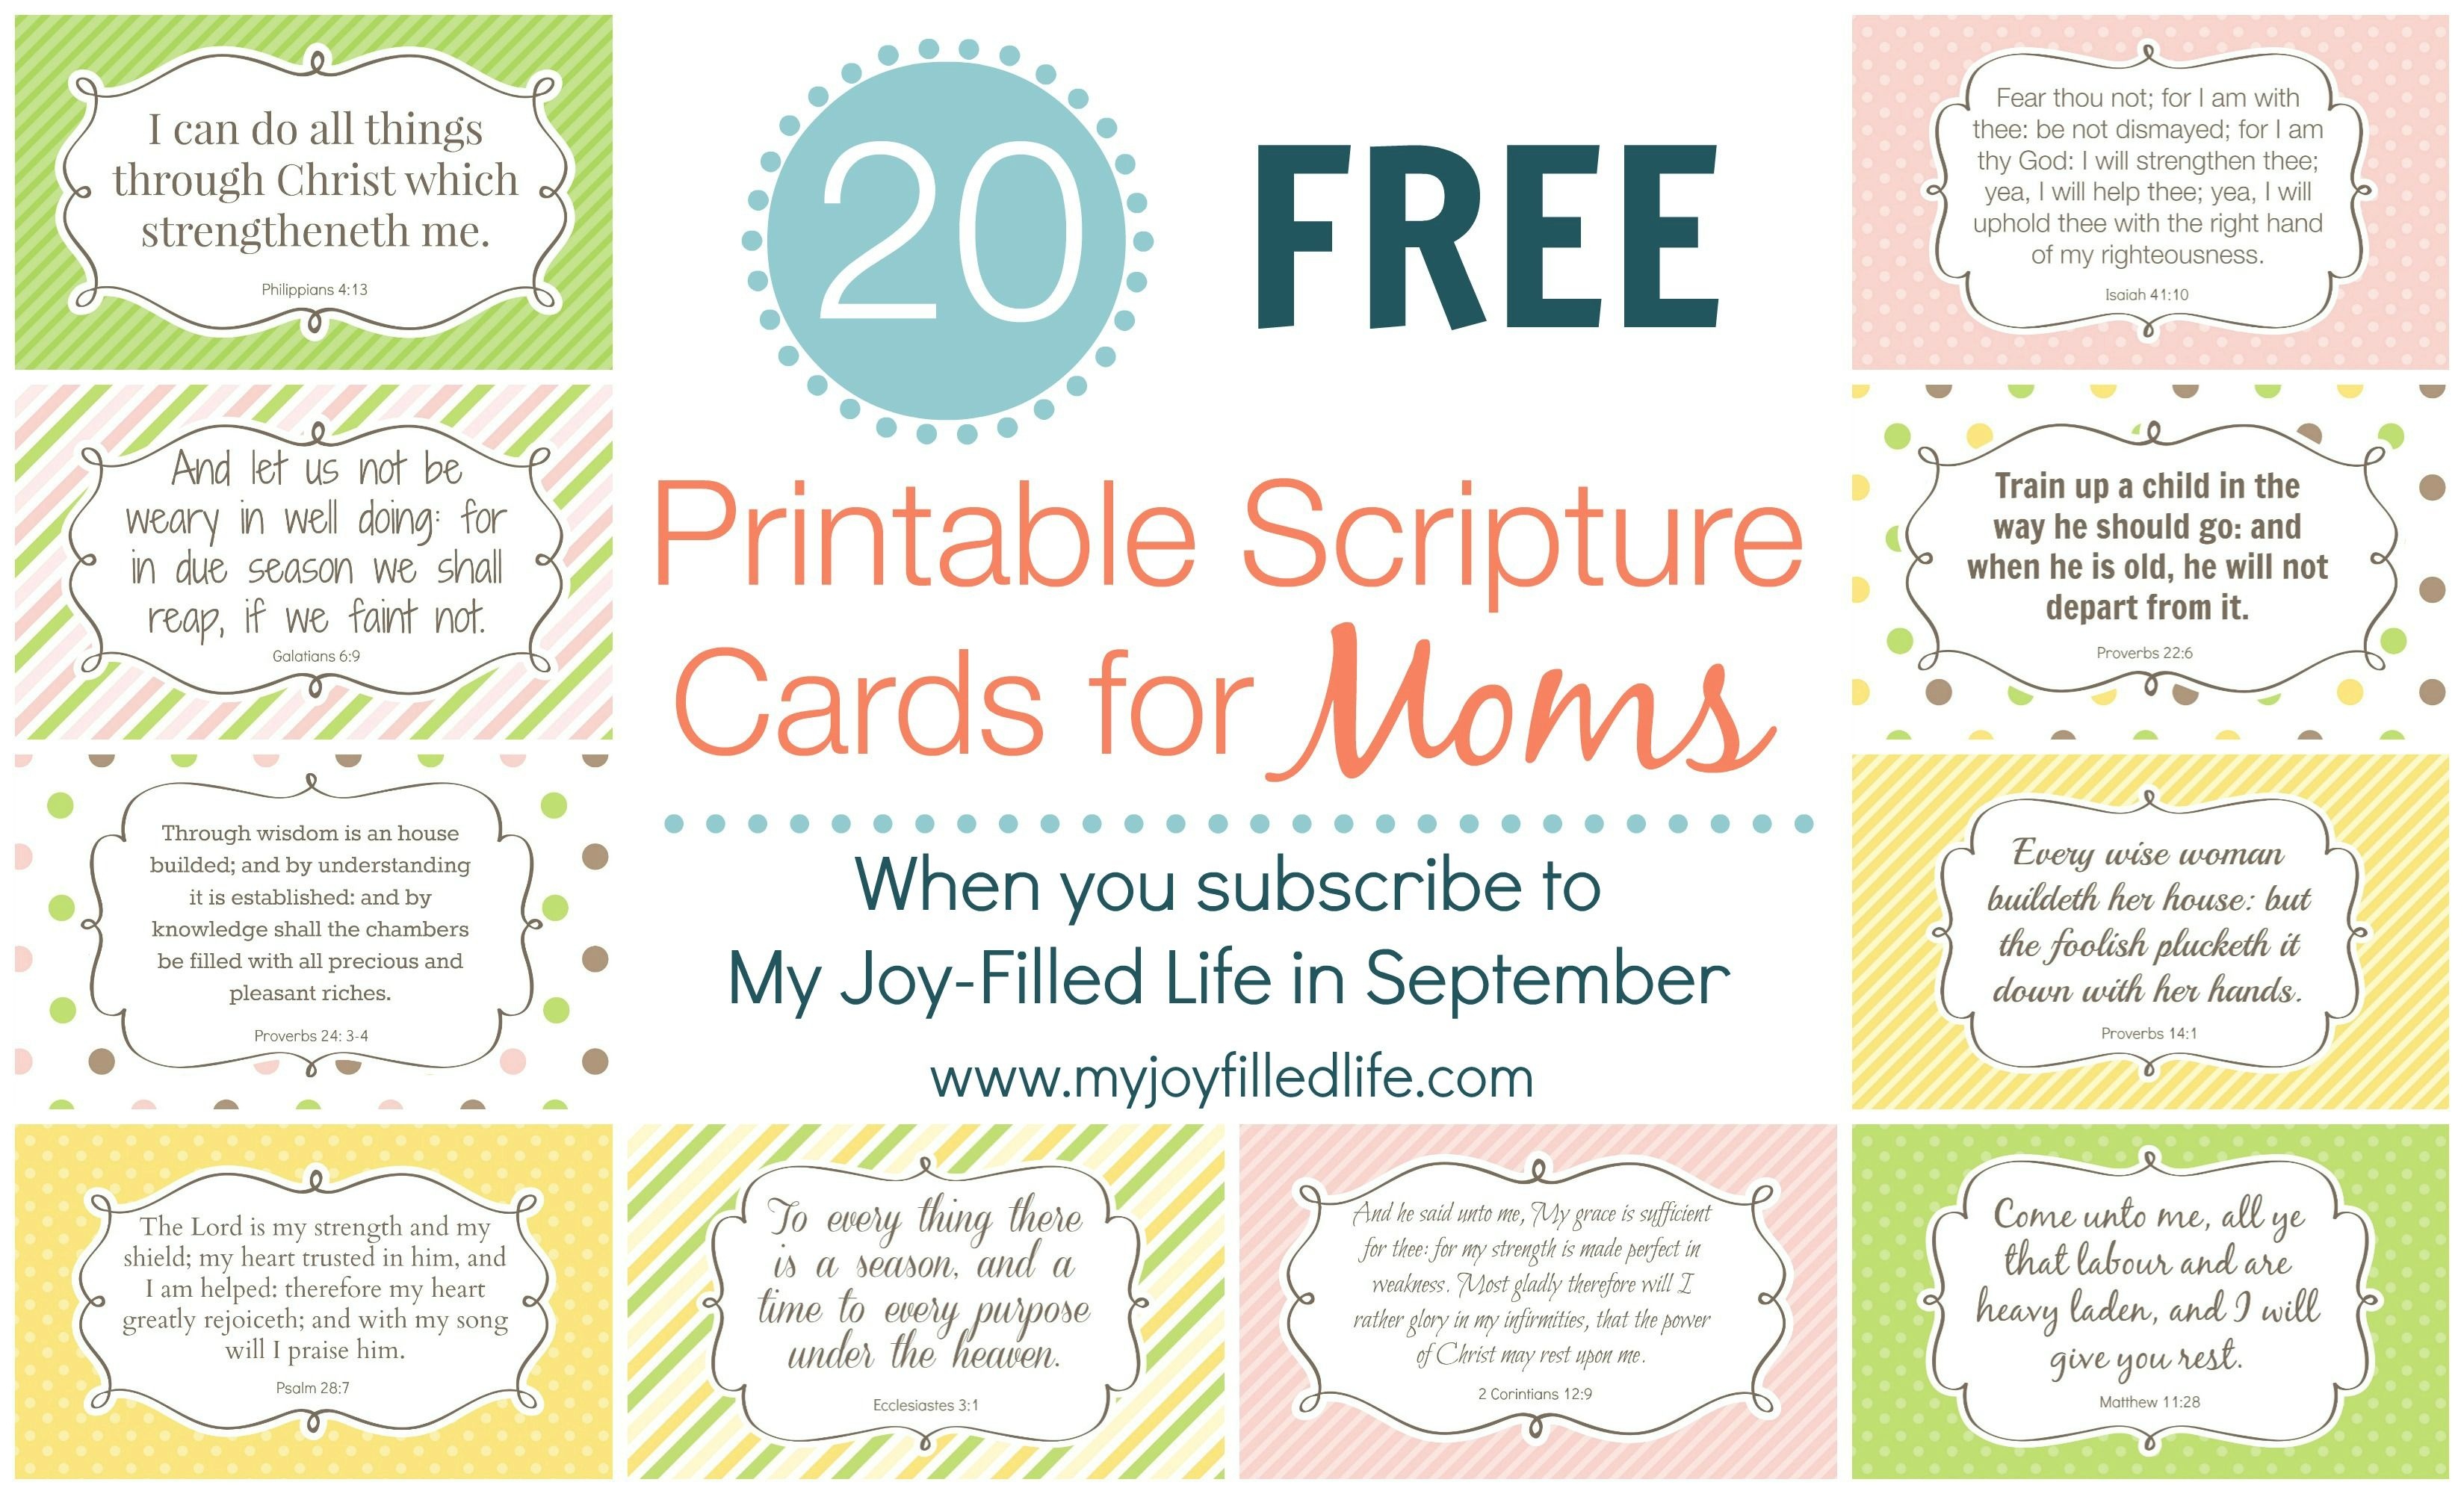 free-printable-prayer-cards-free-printable